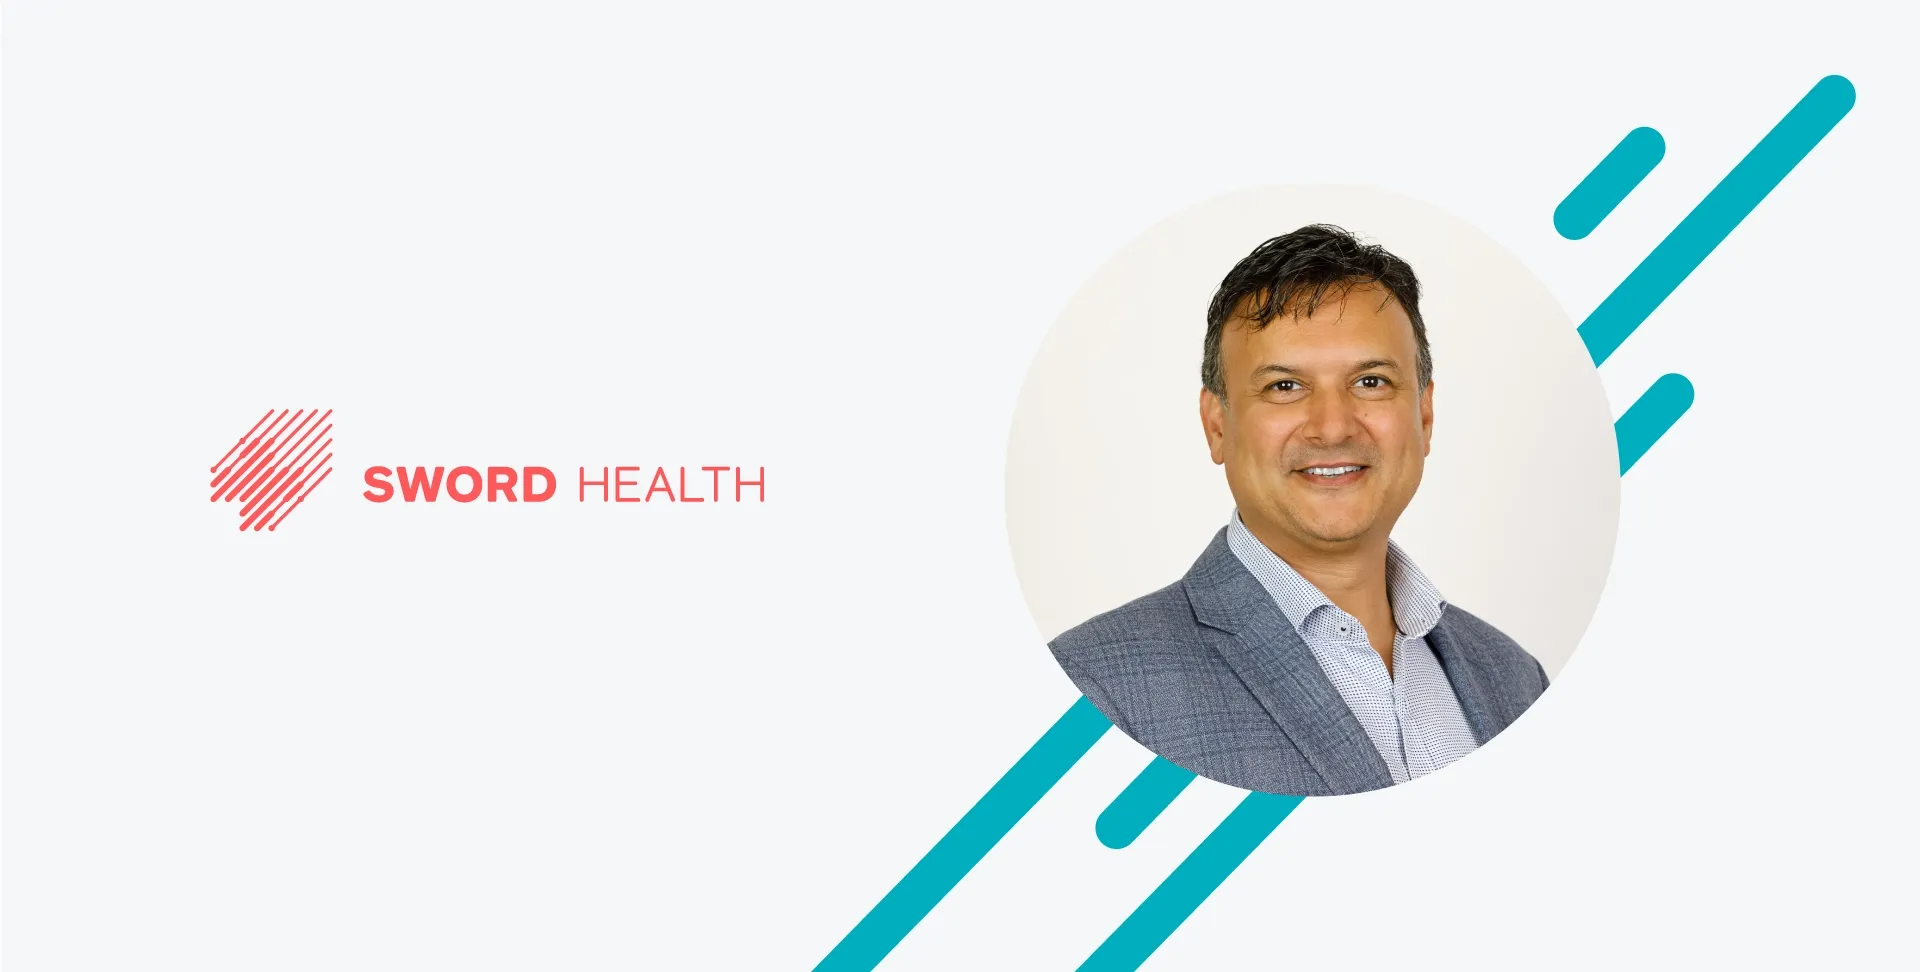 Neil Sharma, new Executive Vice President of Sword Health